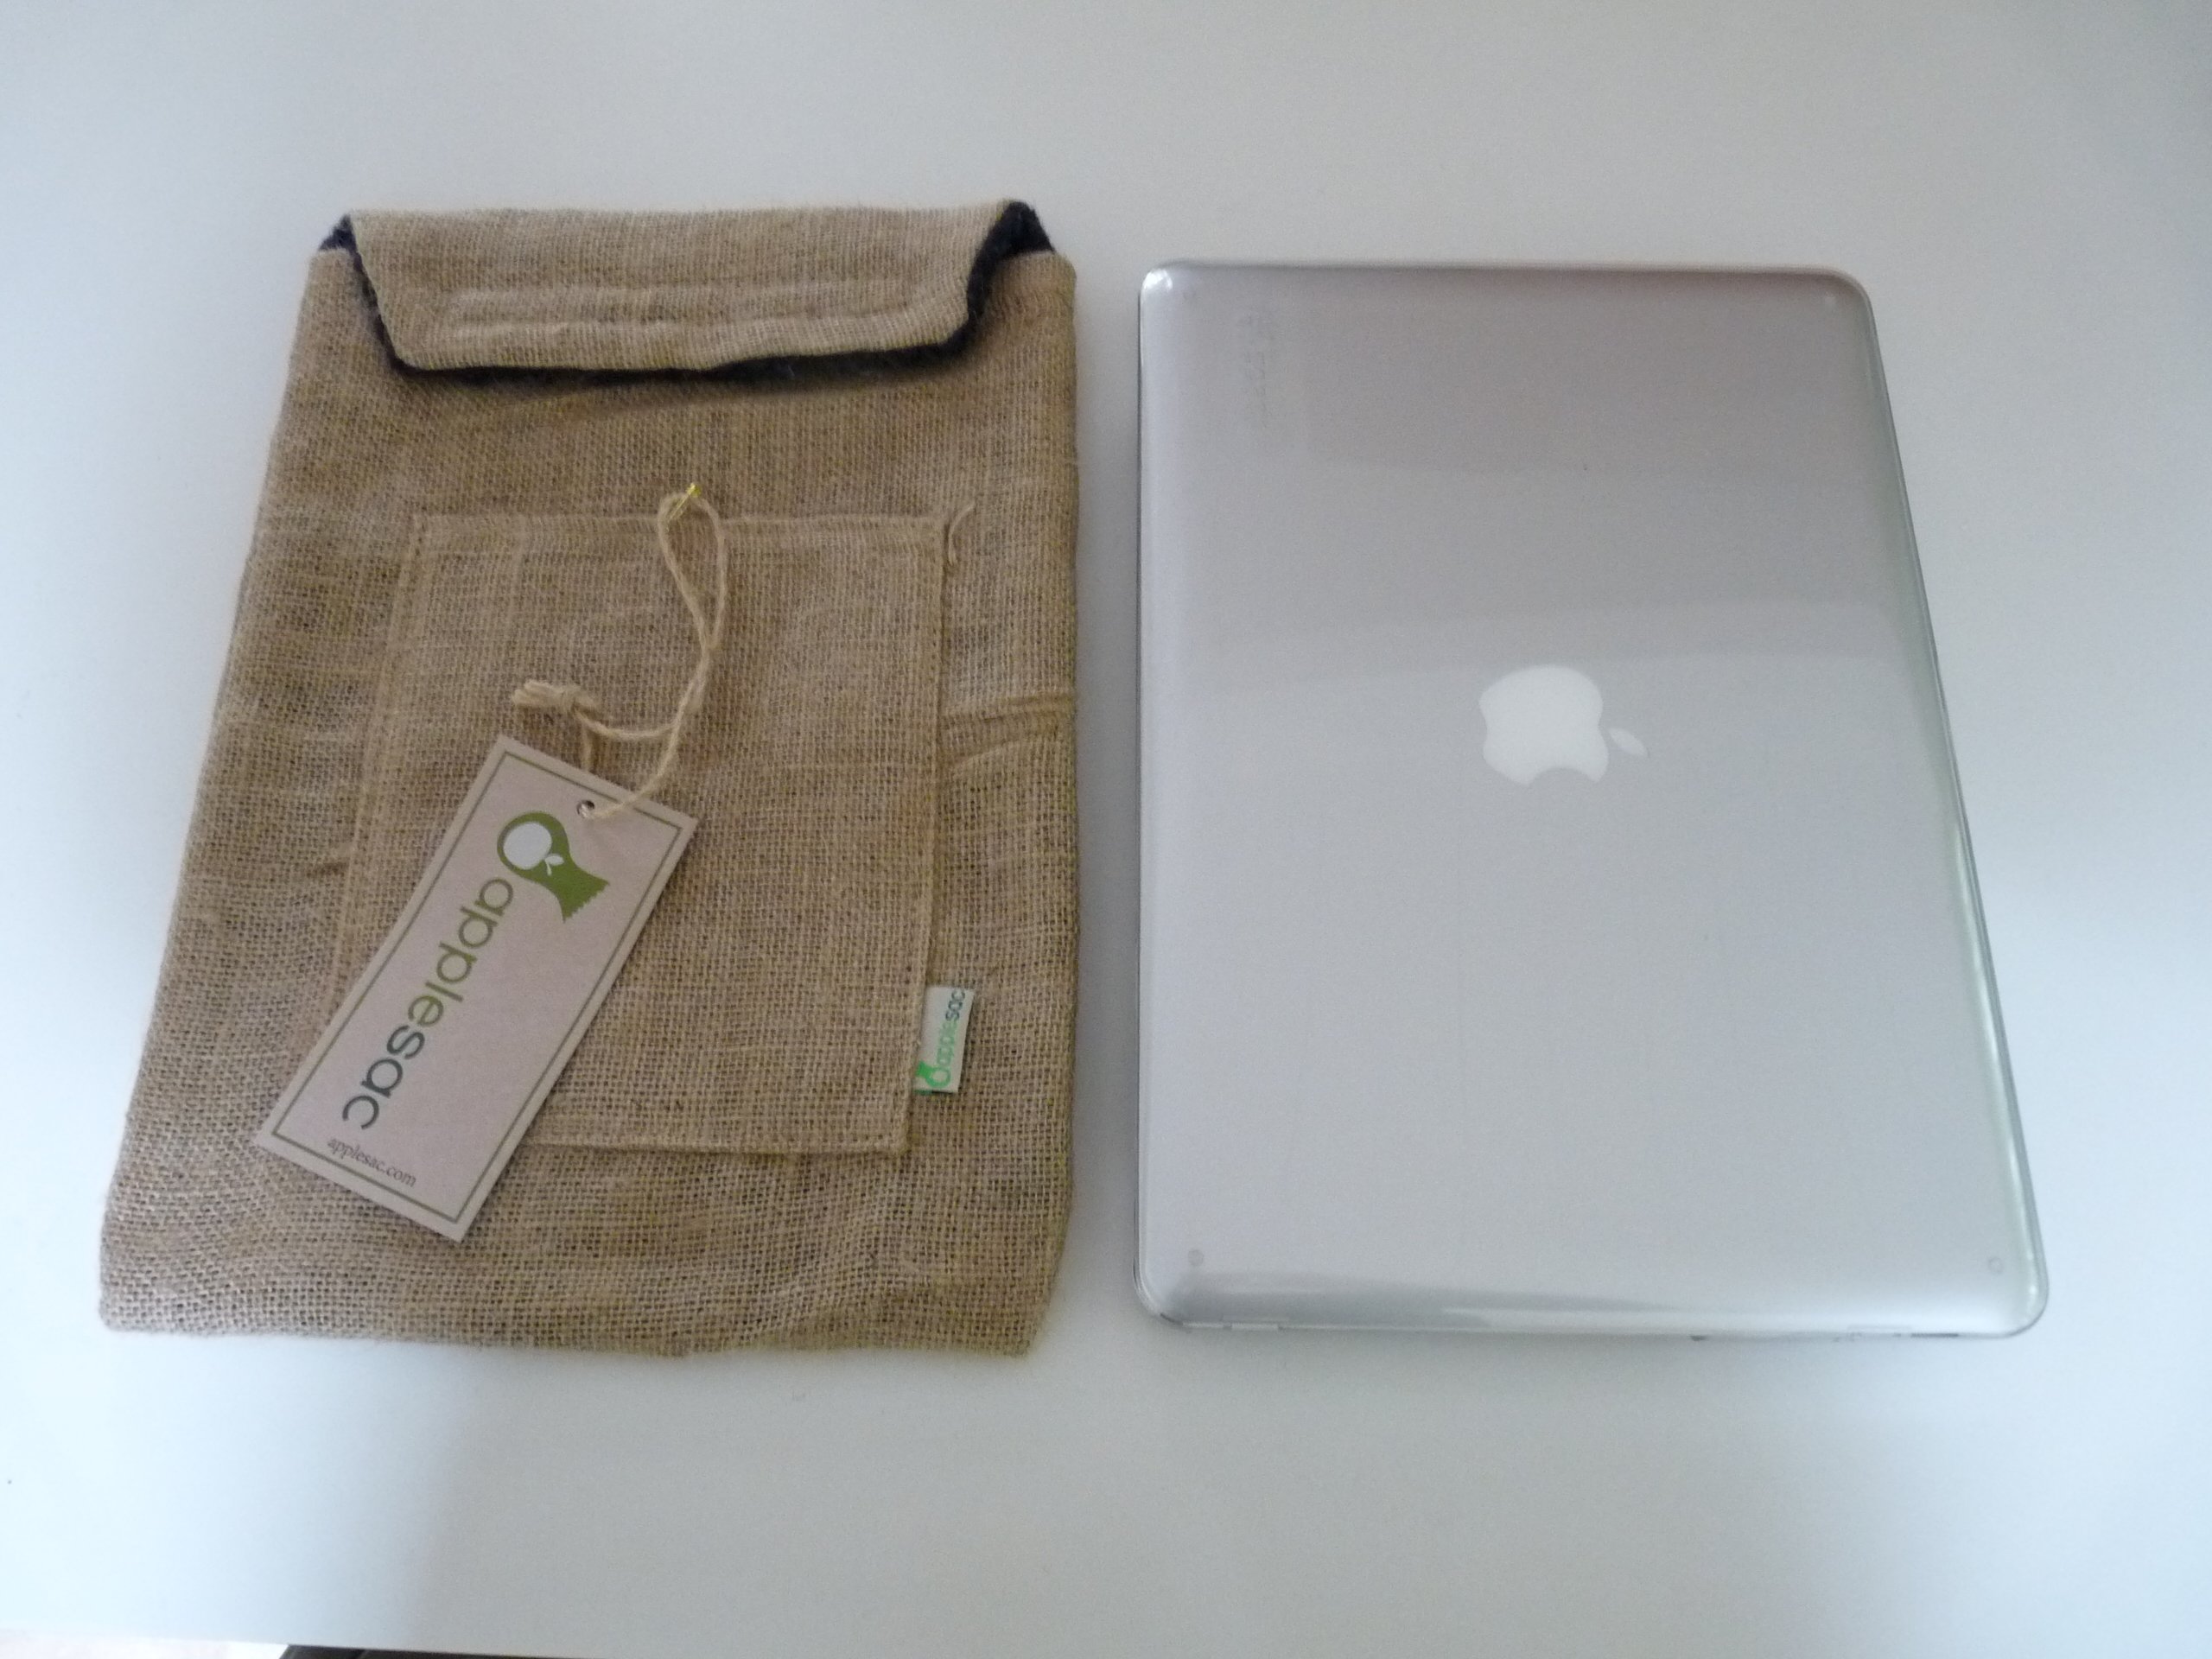 ColcaSac MacBook Pro Sleeves- Review